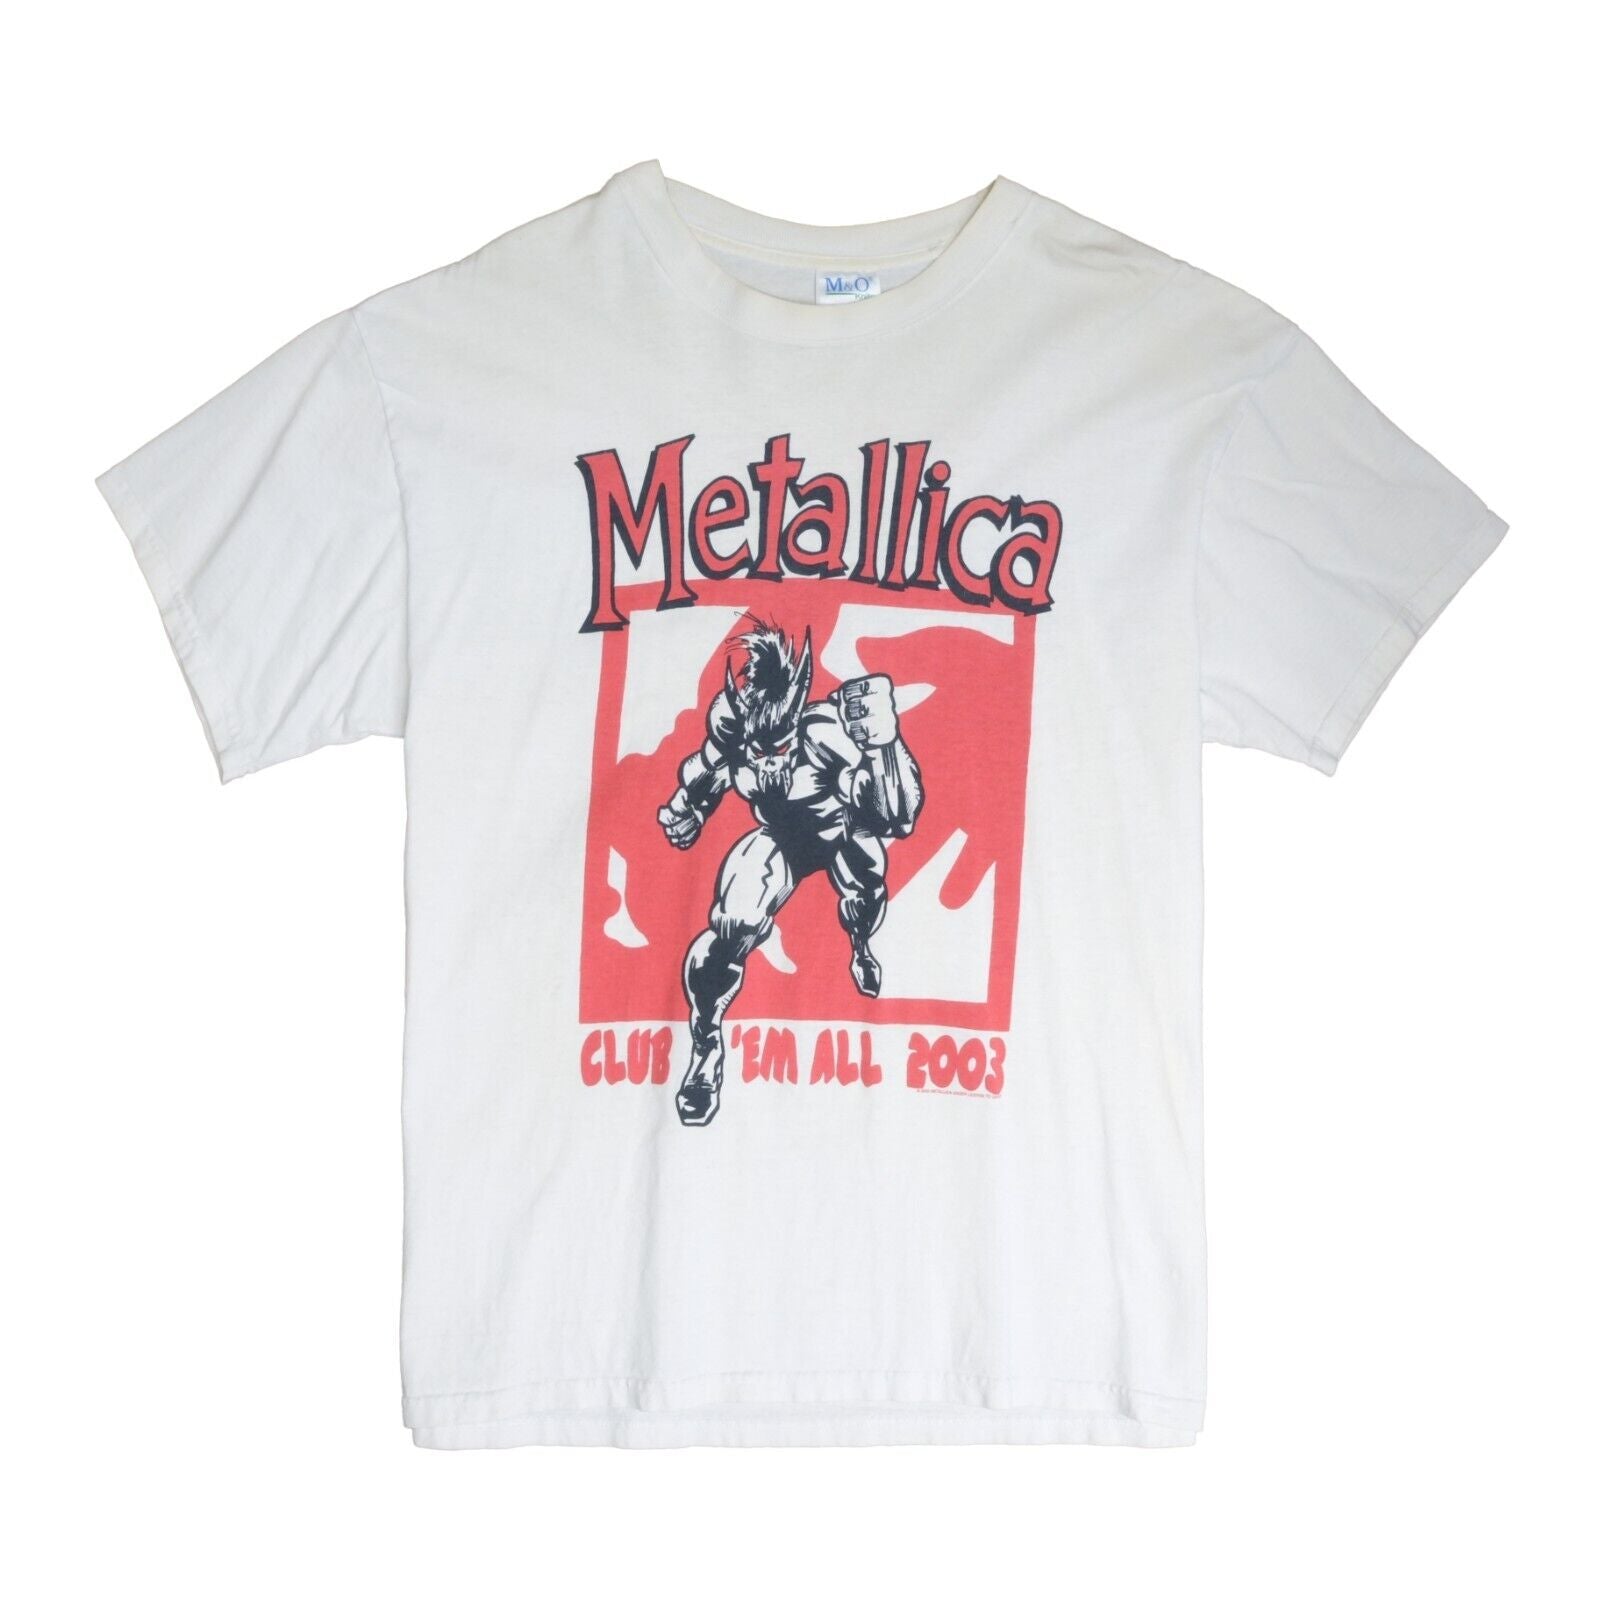 Vintage Metallica Club Em All T-Shirt Size XL White Band Tee 2003 海外 即決-